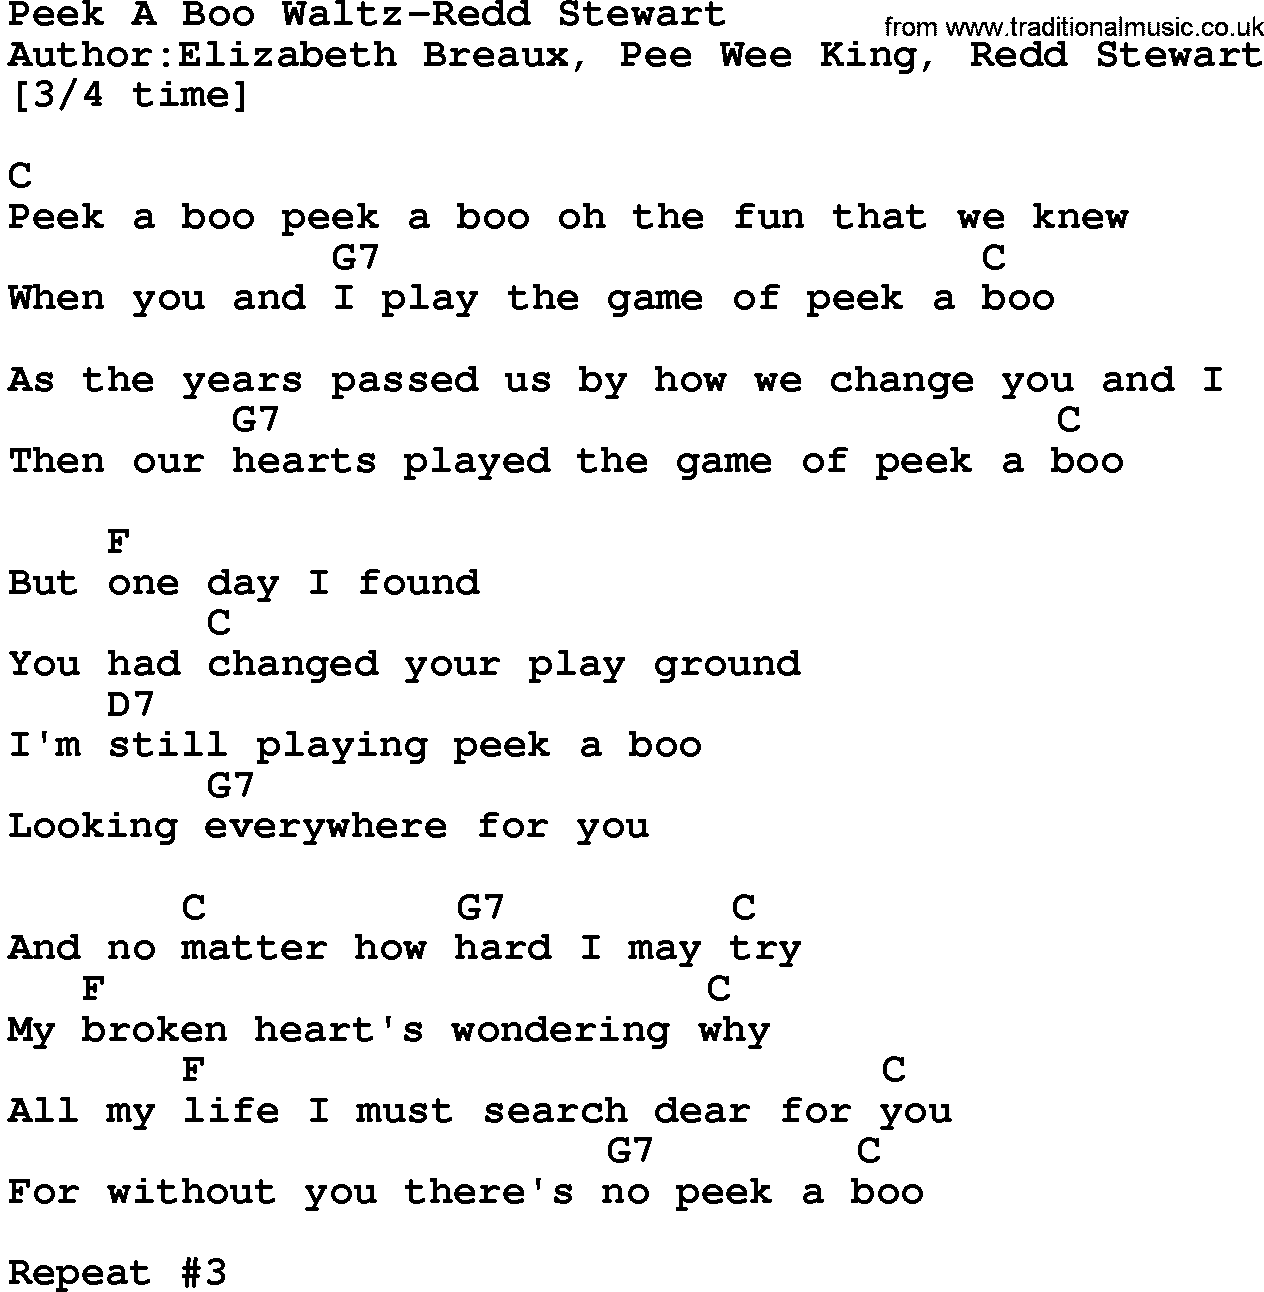 Country music song: Peek A Boo Waltz-Redd Stewart lyrics and chords